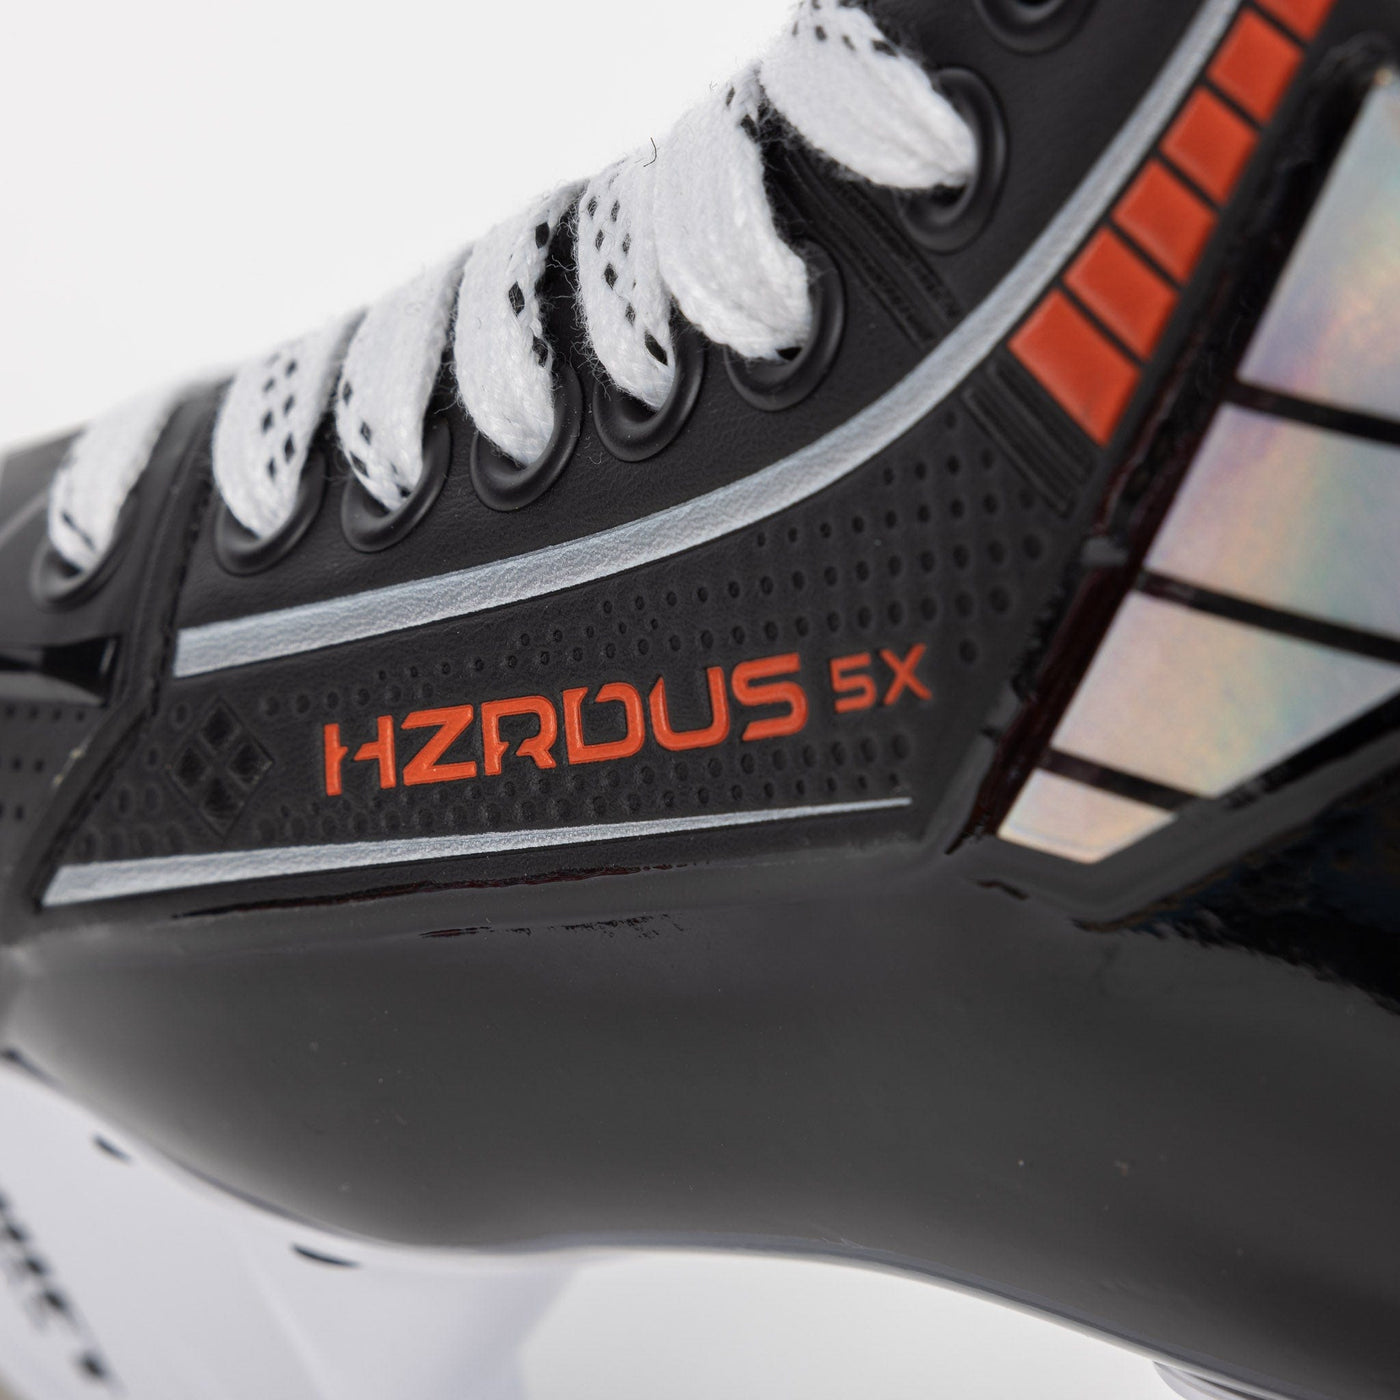 True HZRDUS 5X Junior Hockey Skates - The Hockey Shop Source For Sports